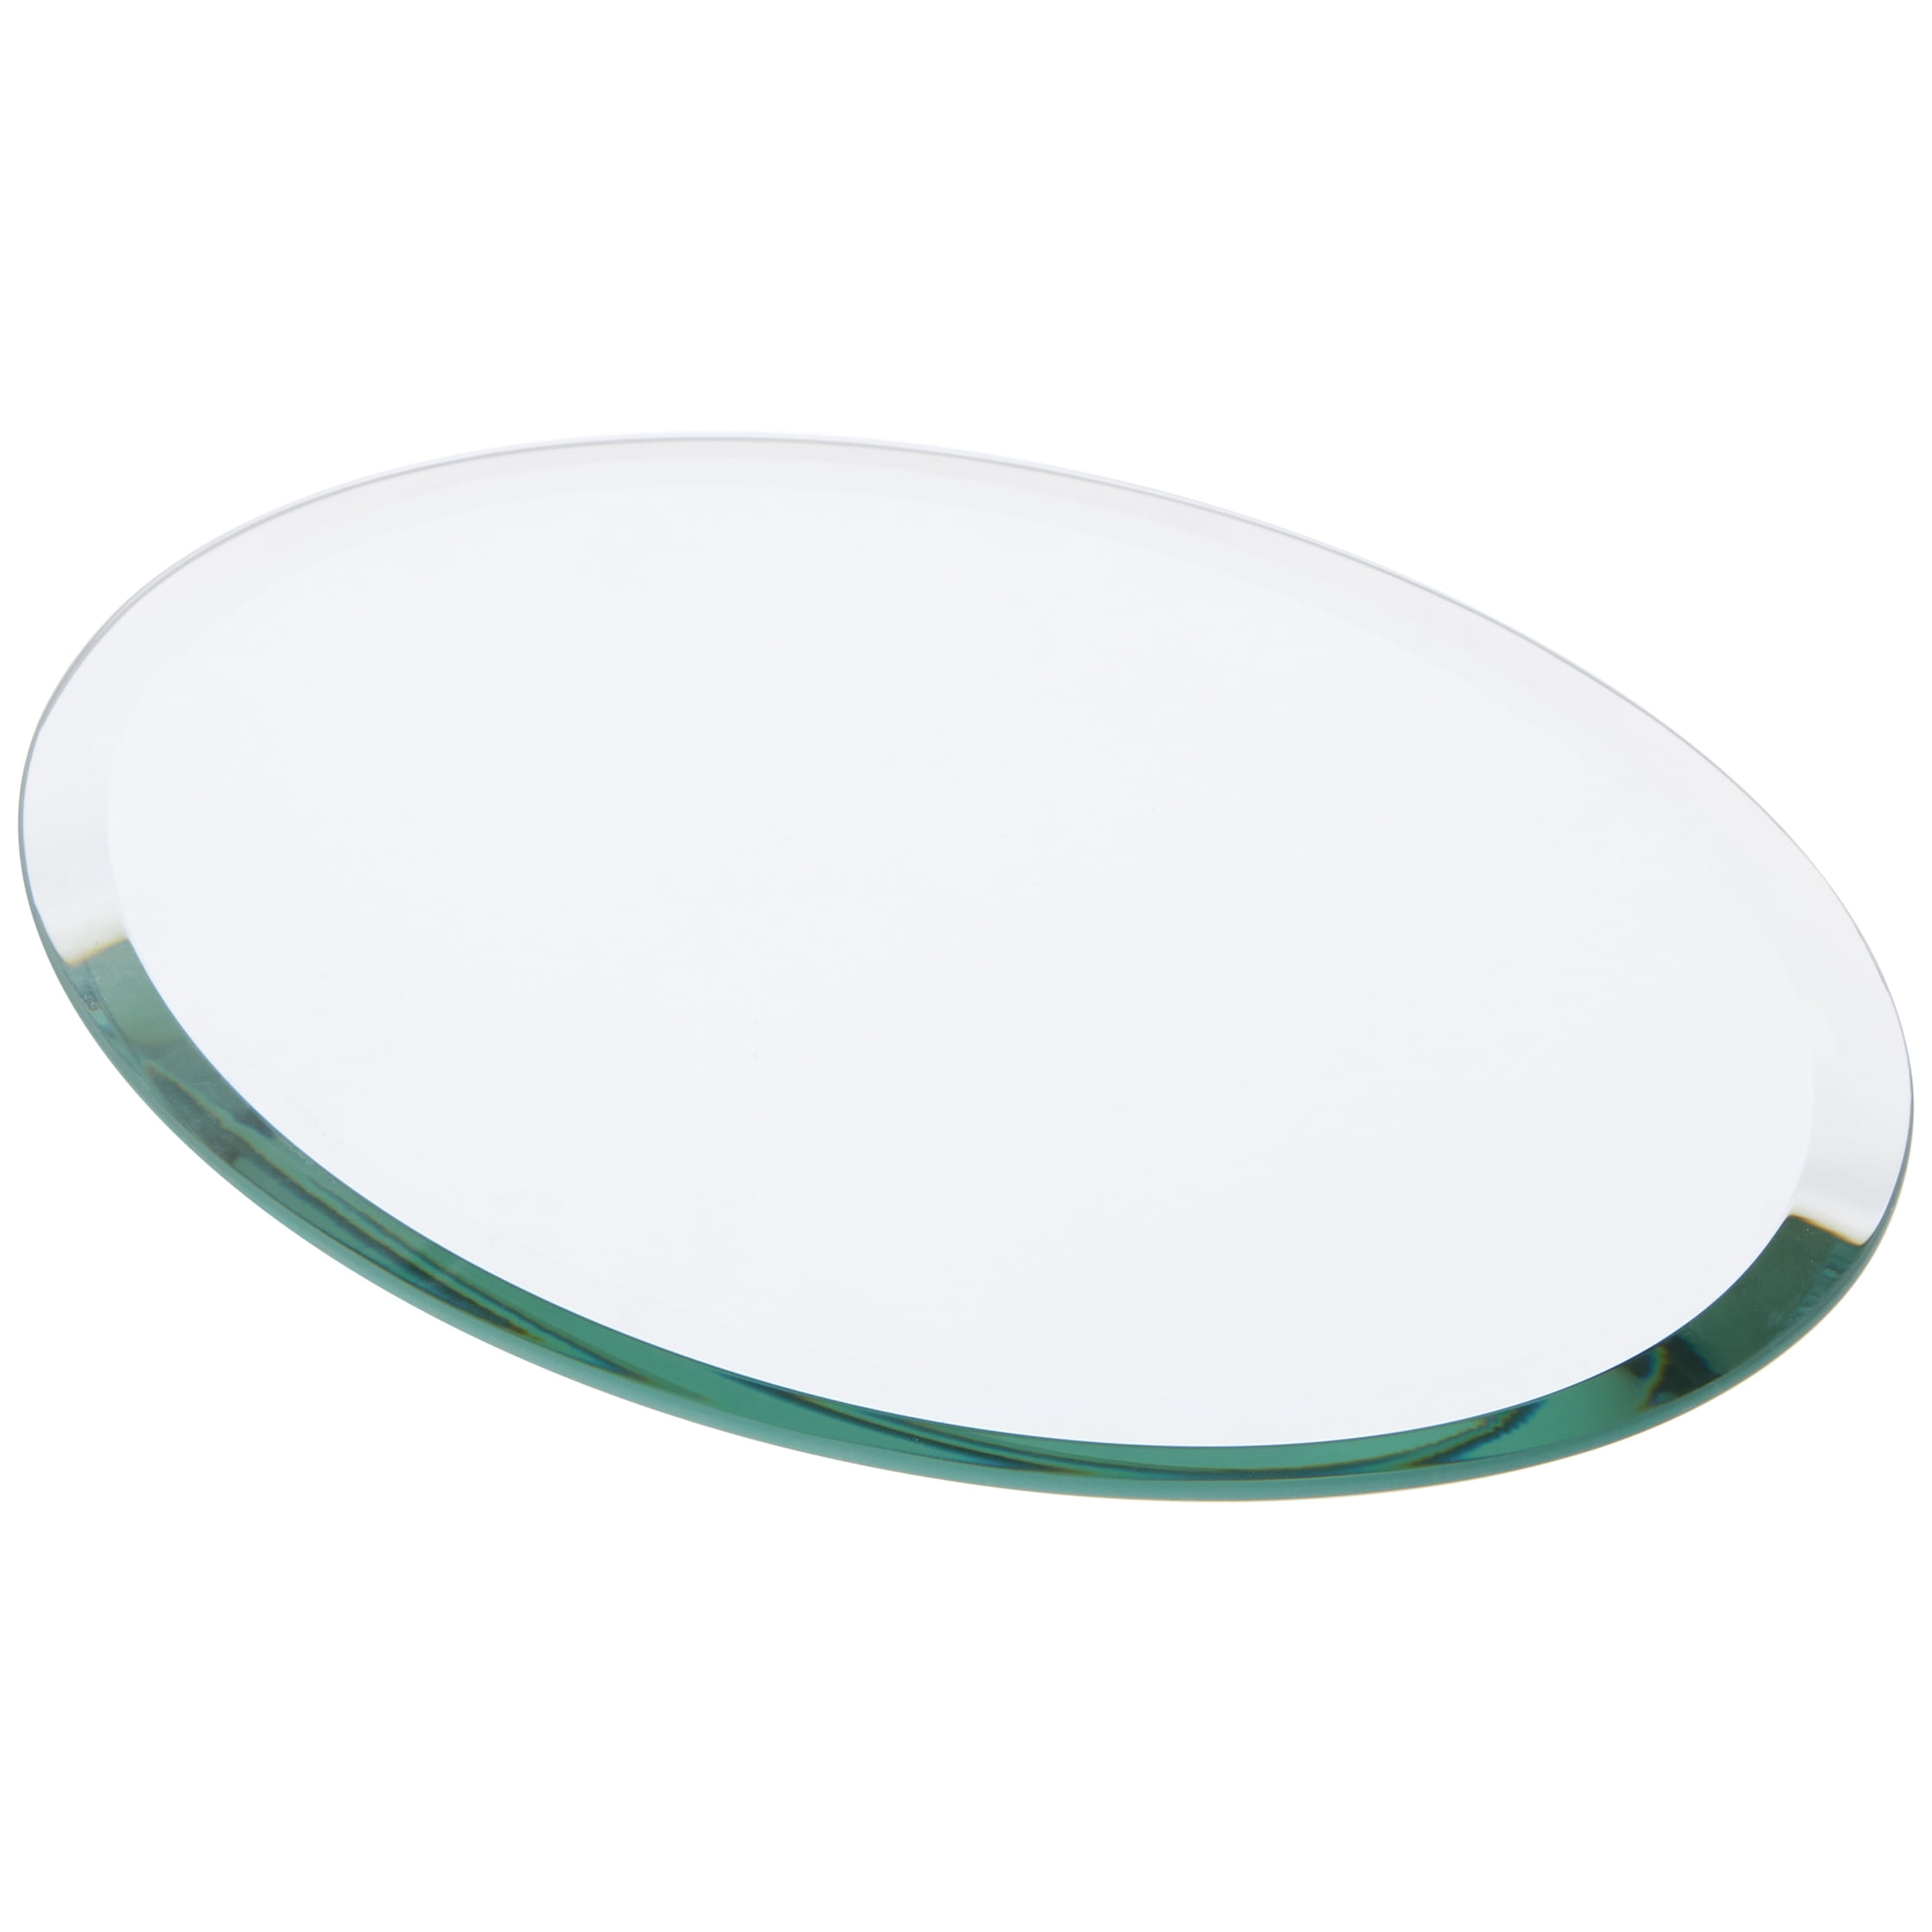 Plymor Oval 5mm Beveled Glass Mirror 5 inch x 7 inch 